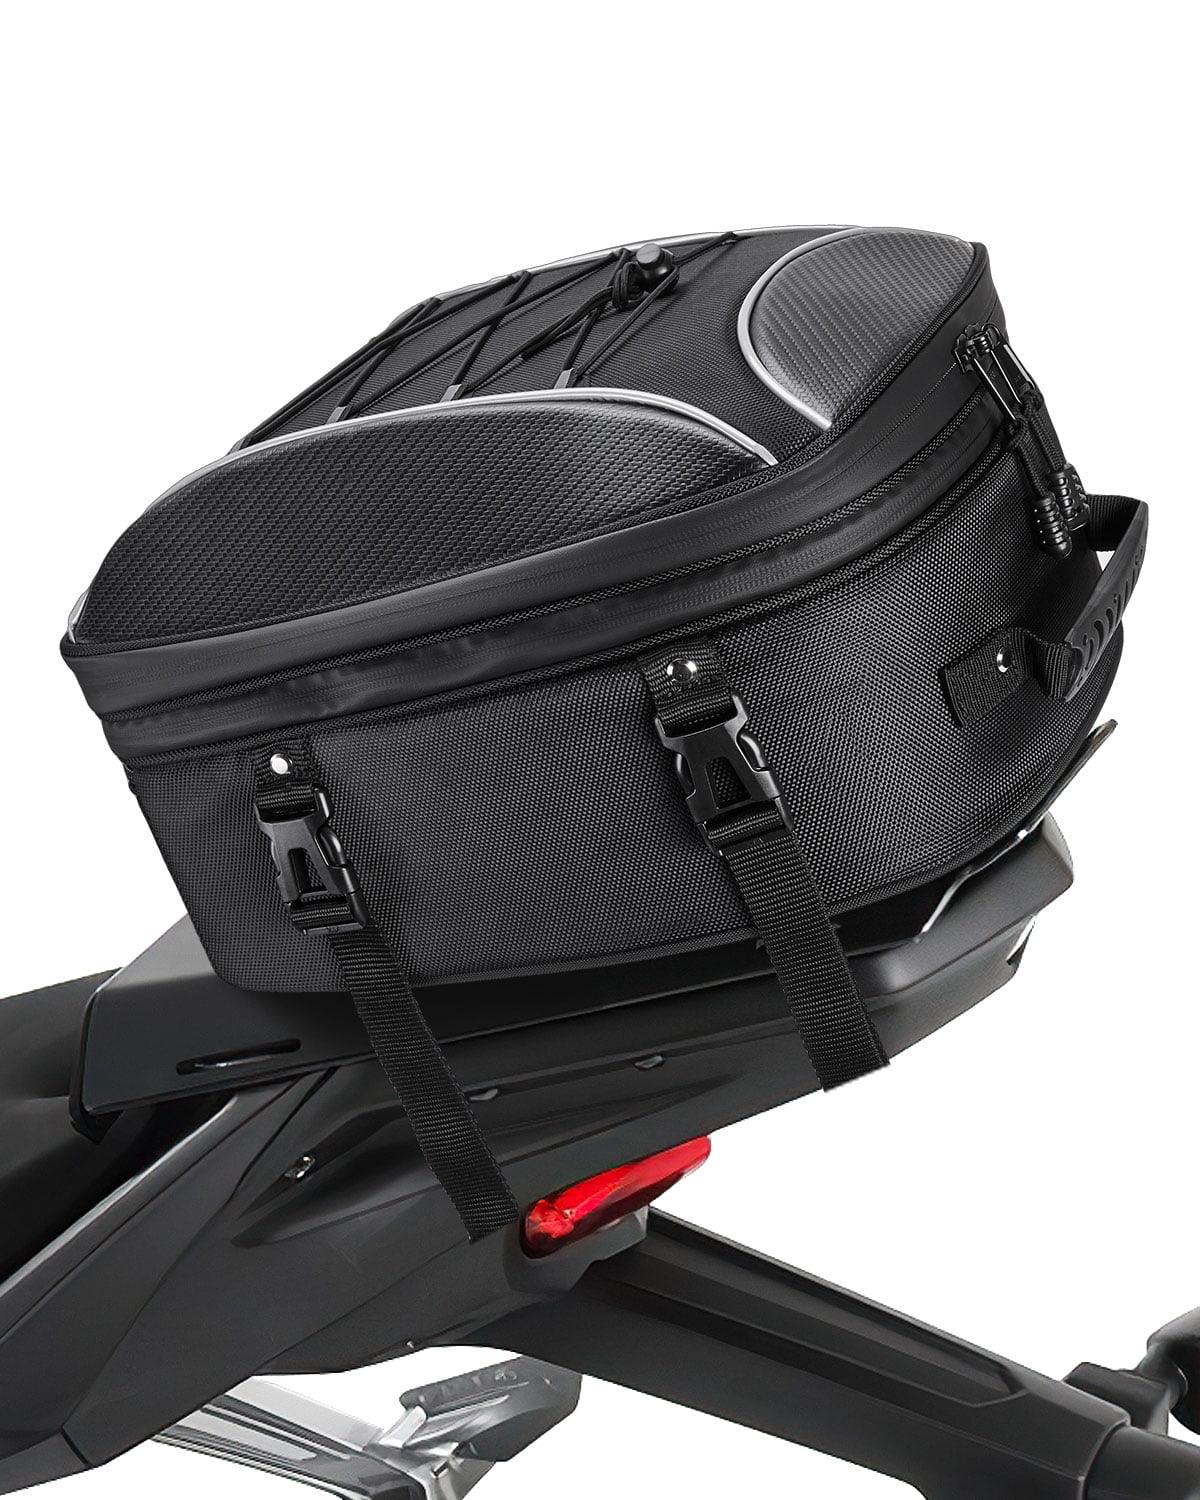 Kemimoto Bicycle Rear Rack Bag, Dual Use Motorcycle Tail Bag with